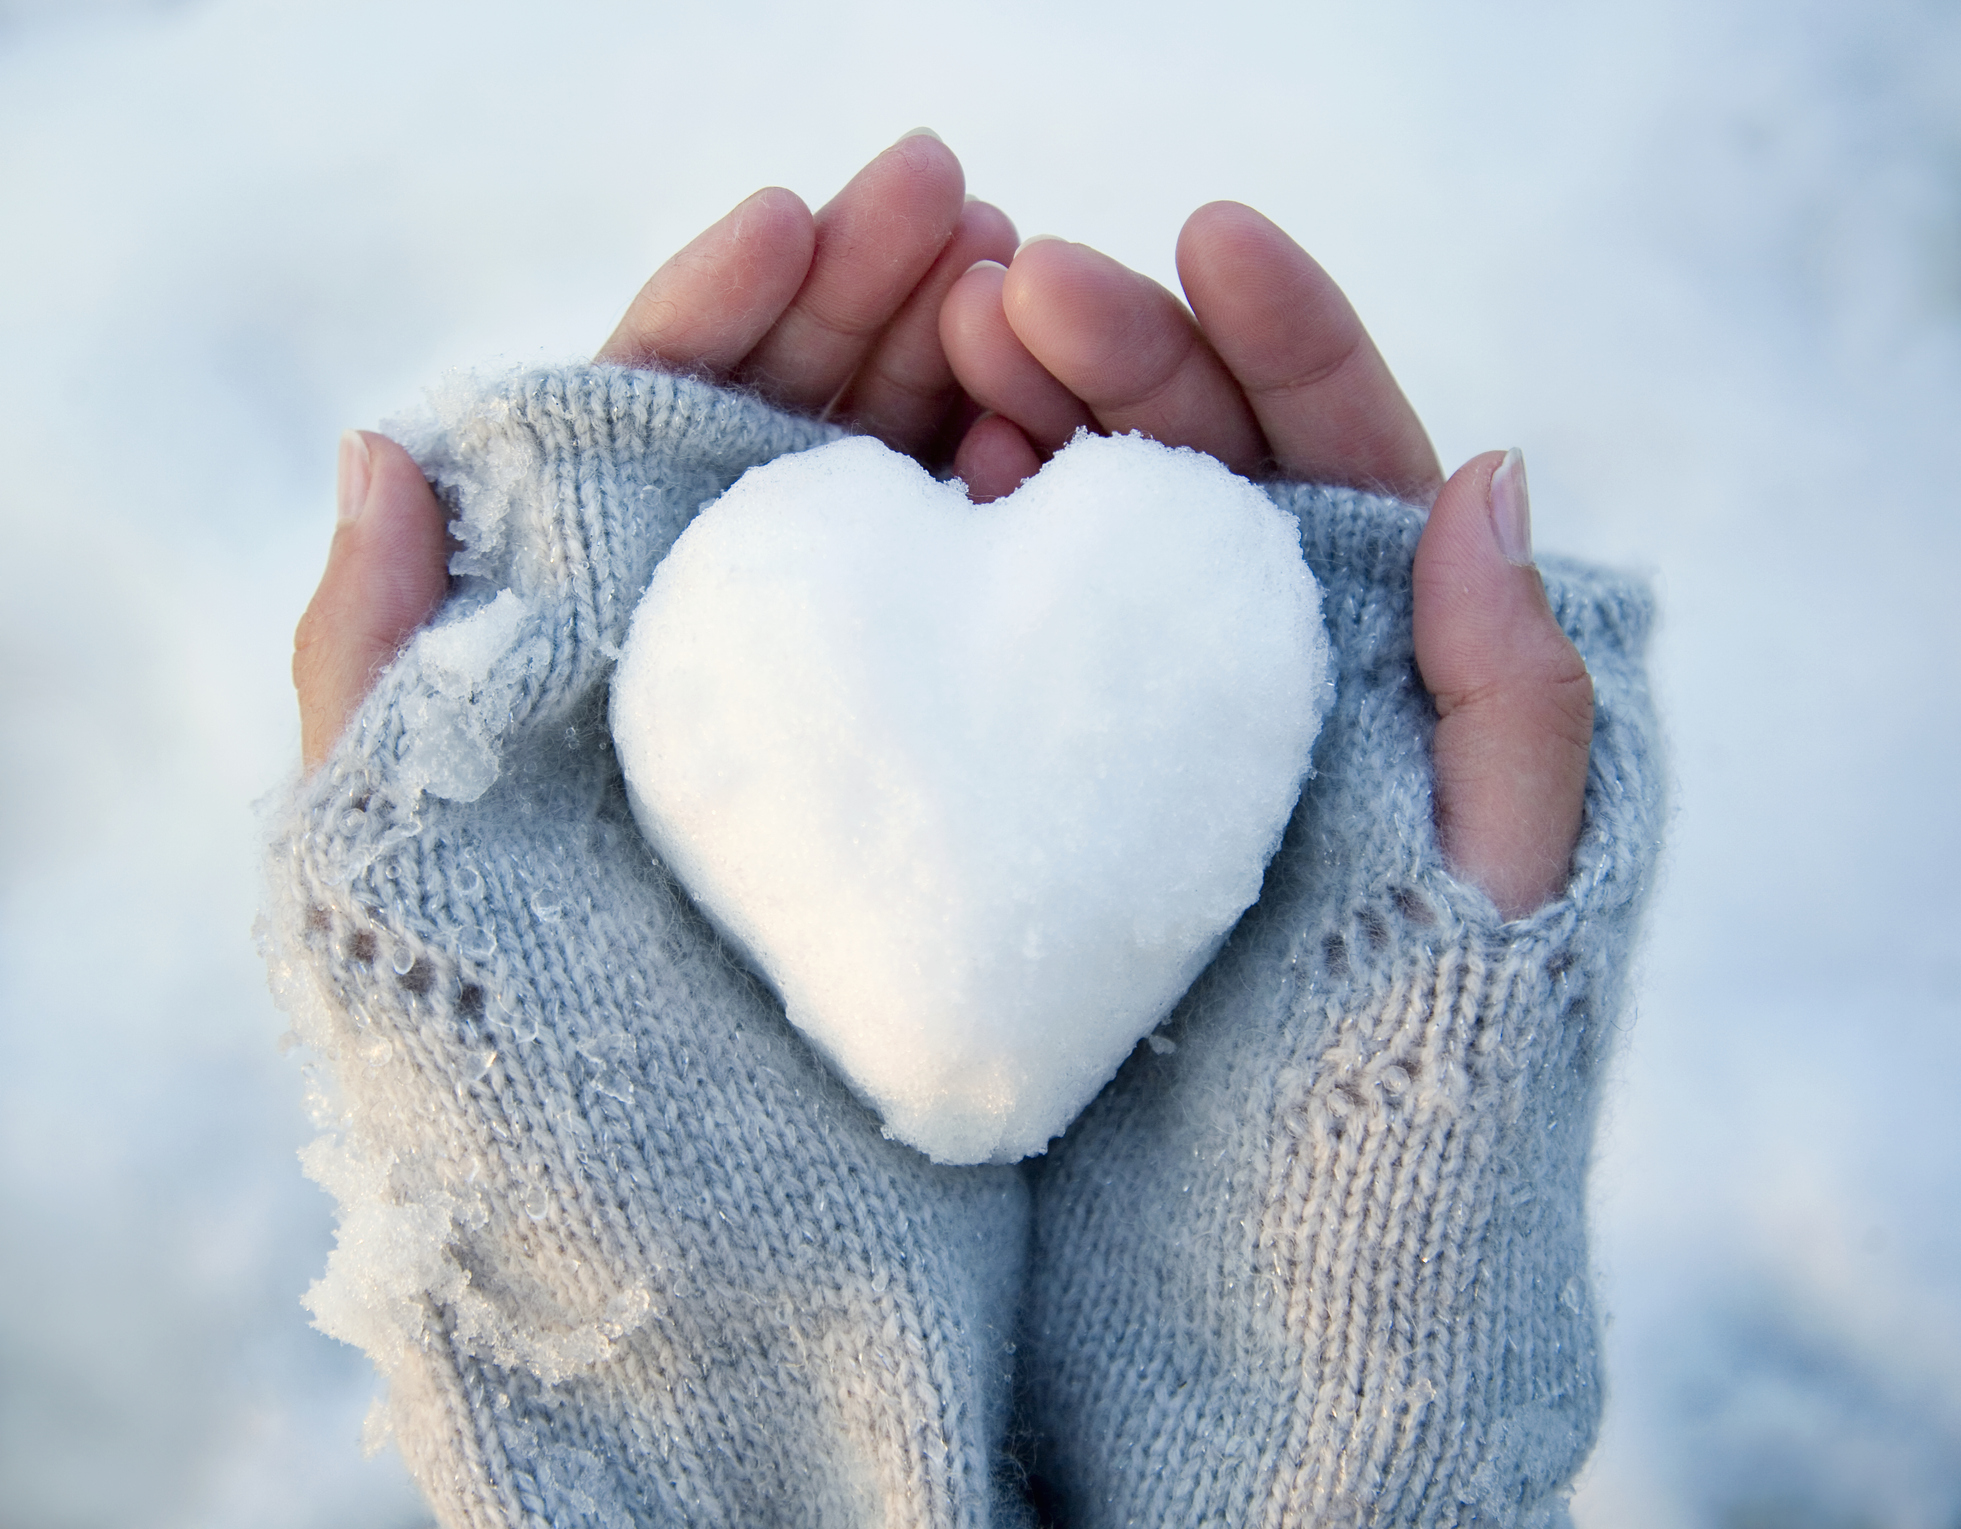 Помощь снежку. Сердечко из снега. Зимние аватарки. Сердце из снега в руках. Сердце из снега в ладонях.